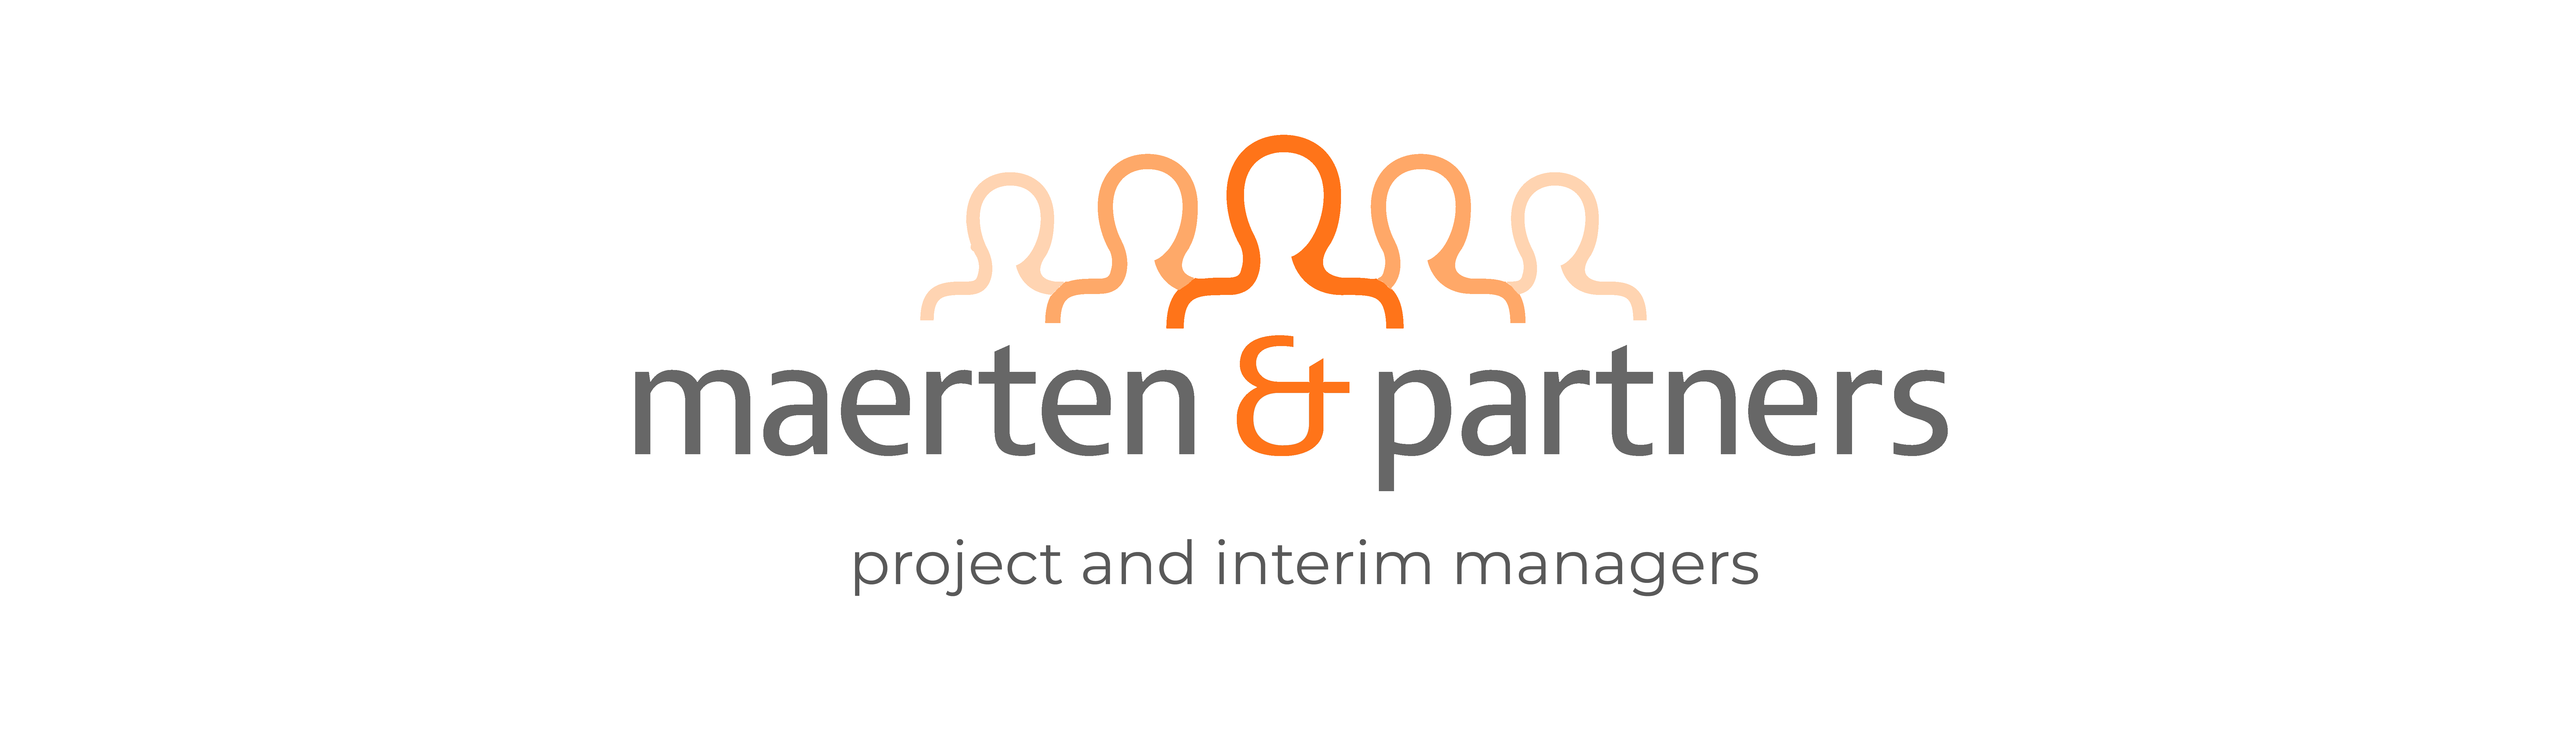 00850424241168-logo-maerten-partners-transparant-v3.png